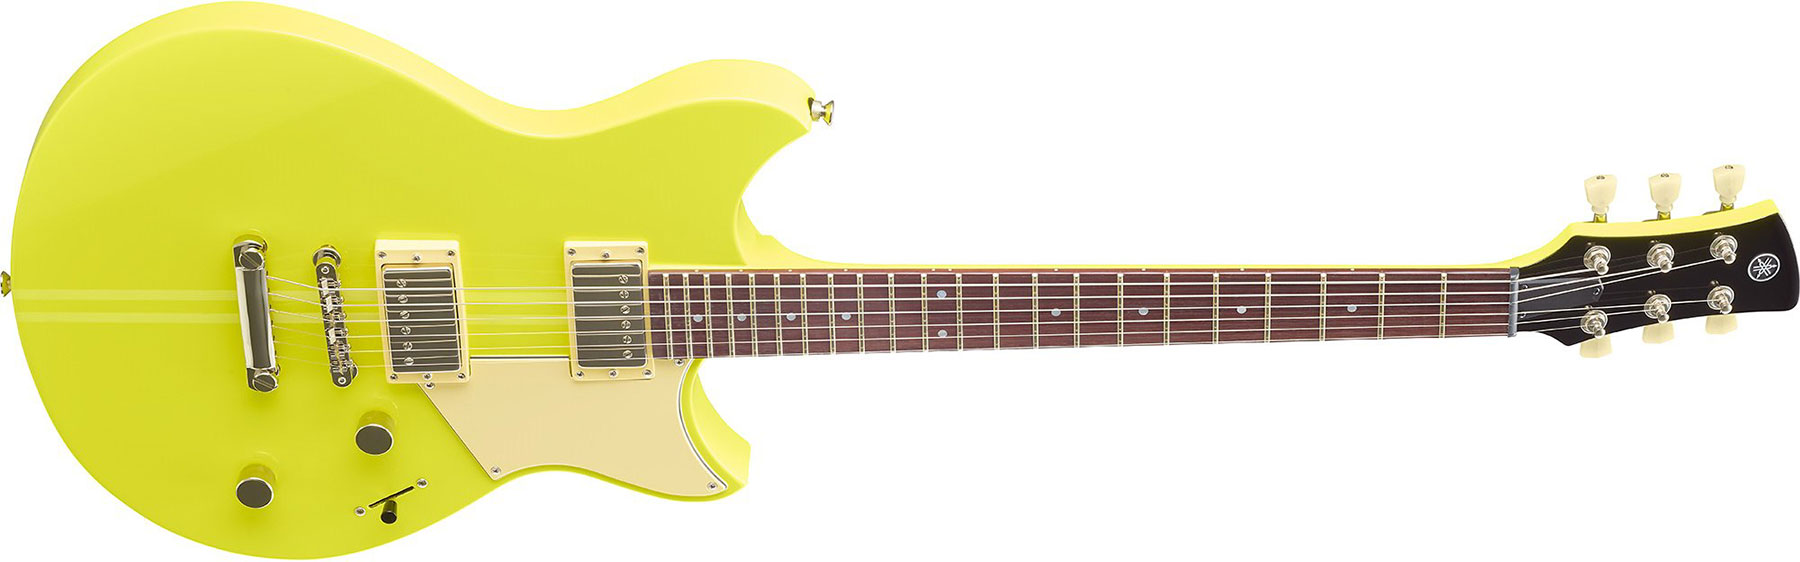 Yamaha Rse20 Revstar Element Hh Ht Rw - Neon Yellow - Double cut electric guitar - Variation 1